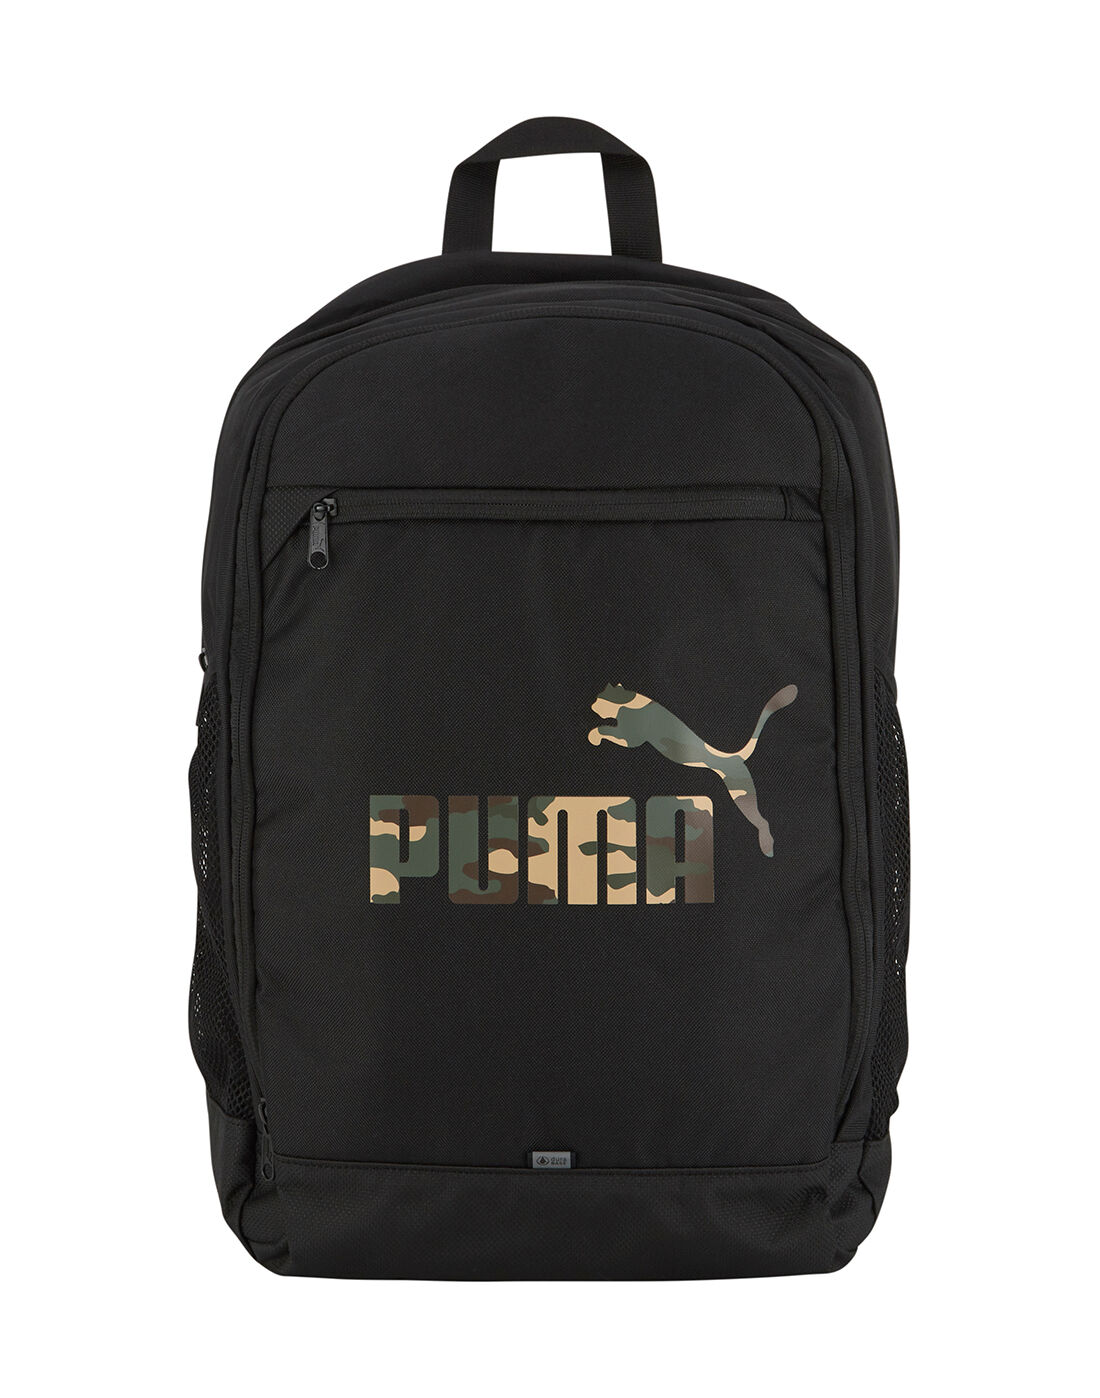 Black Puma School Bag | Life Style Sports